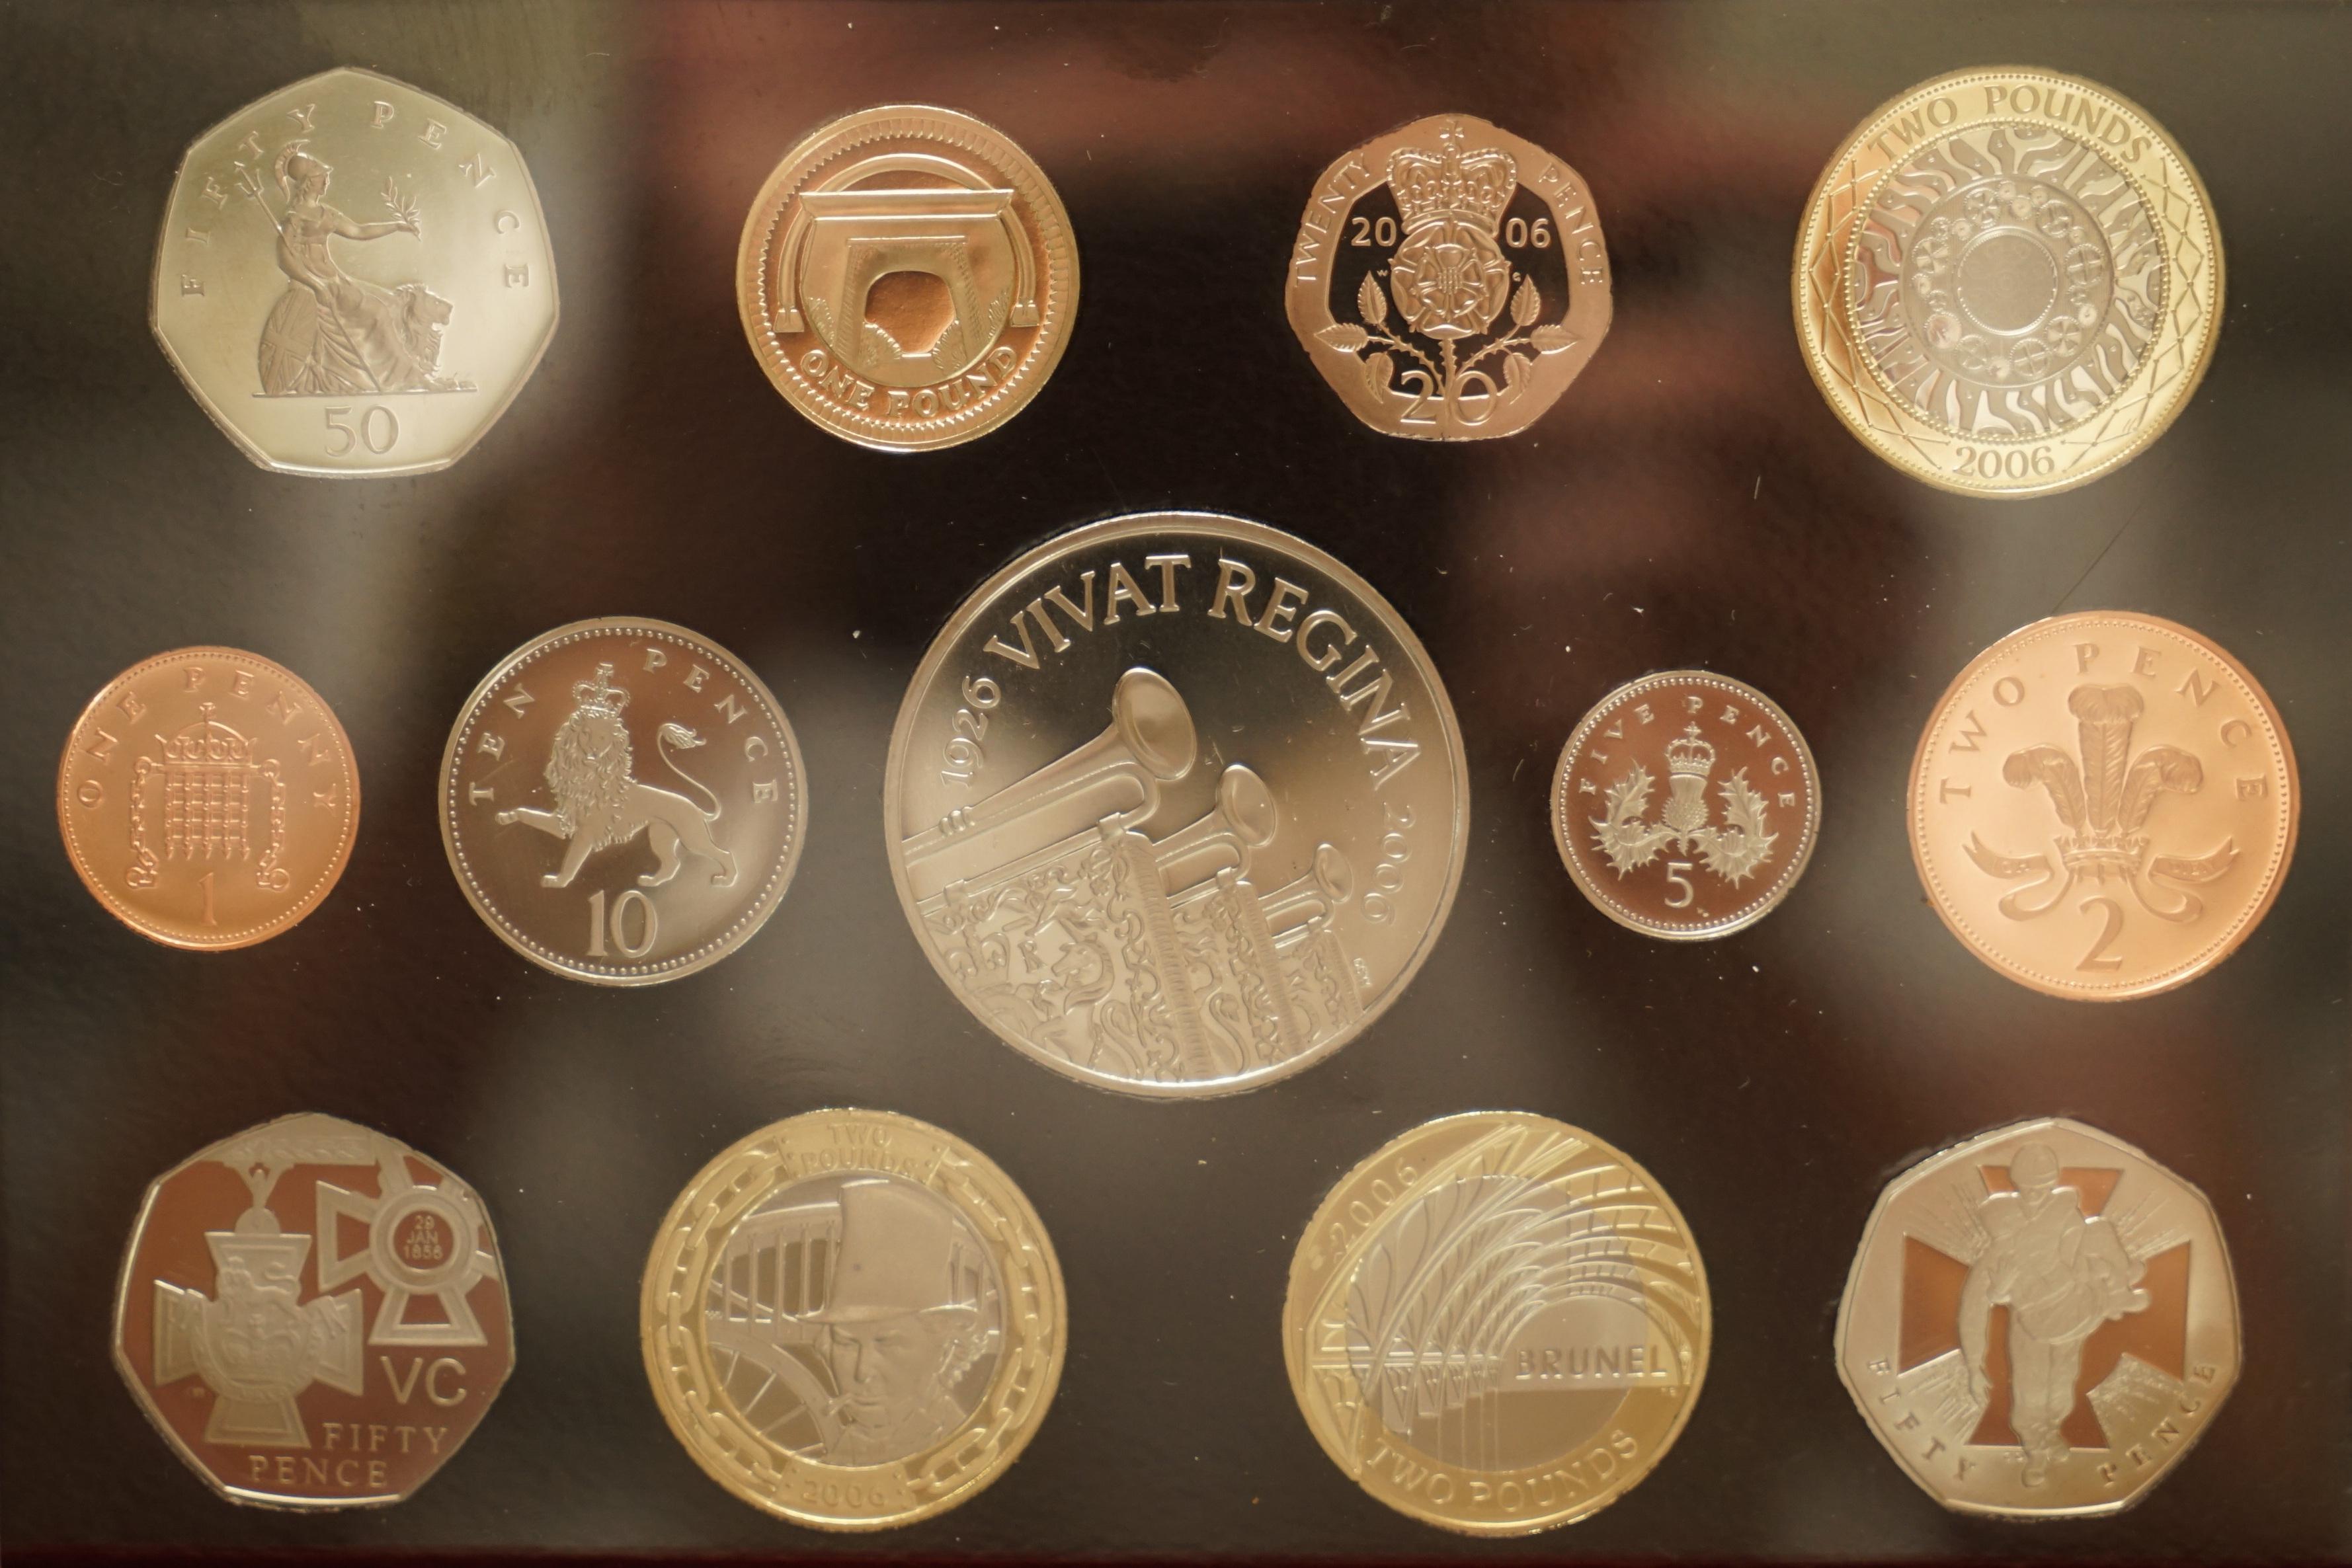 13 Coin Royal Mint 1926, 2006 Queen Elizabeth Proof Set with £5 Vivat Regina 8